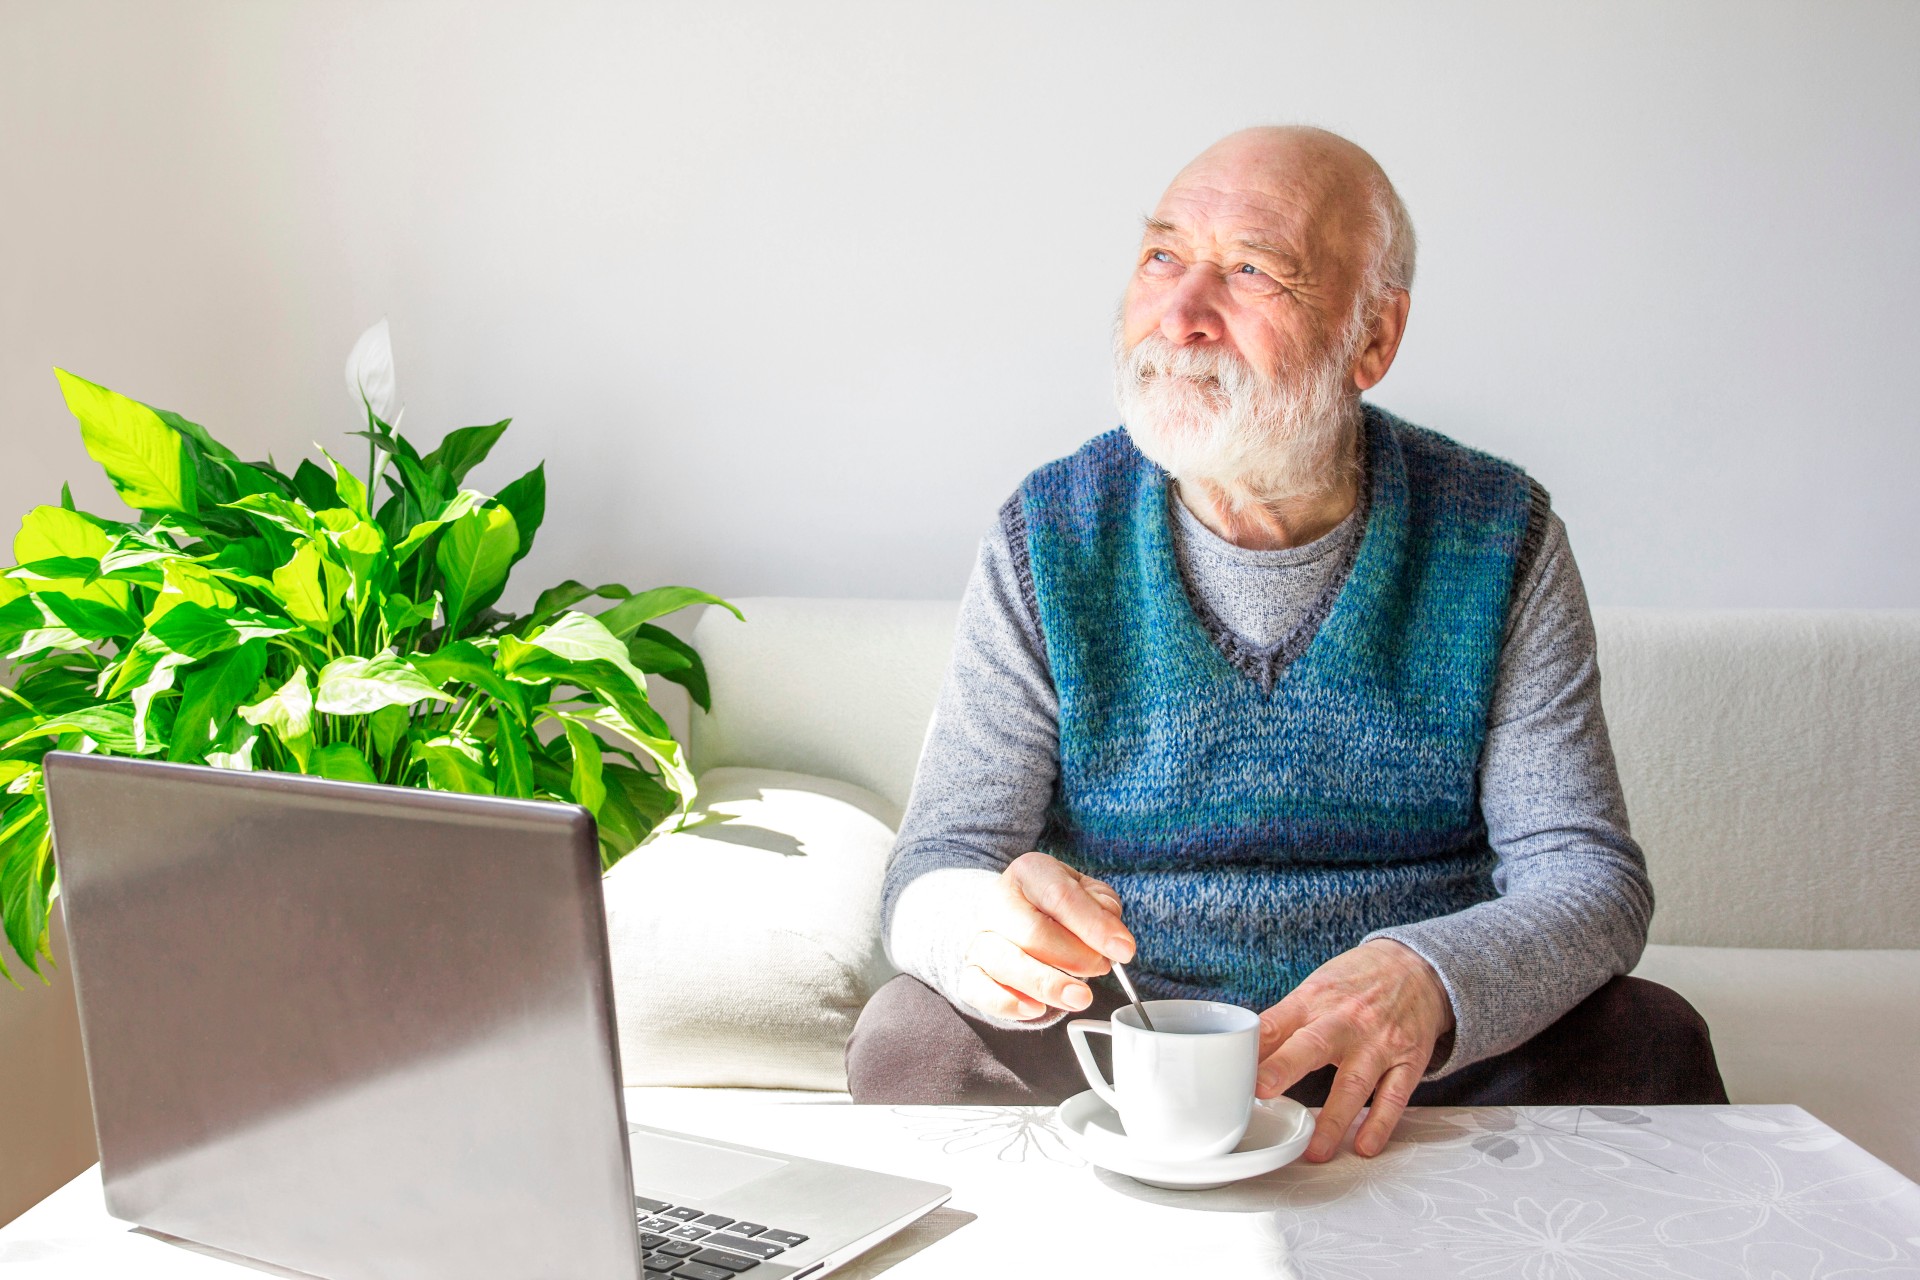 Senior man mixing his coffee while using his laptop